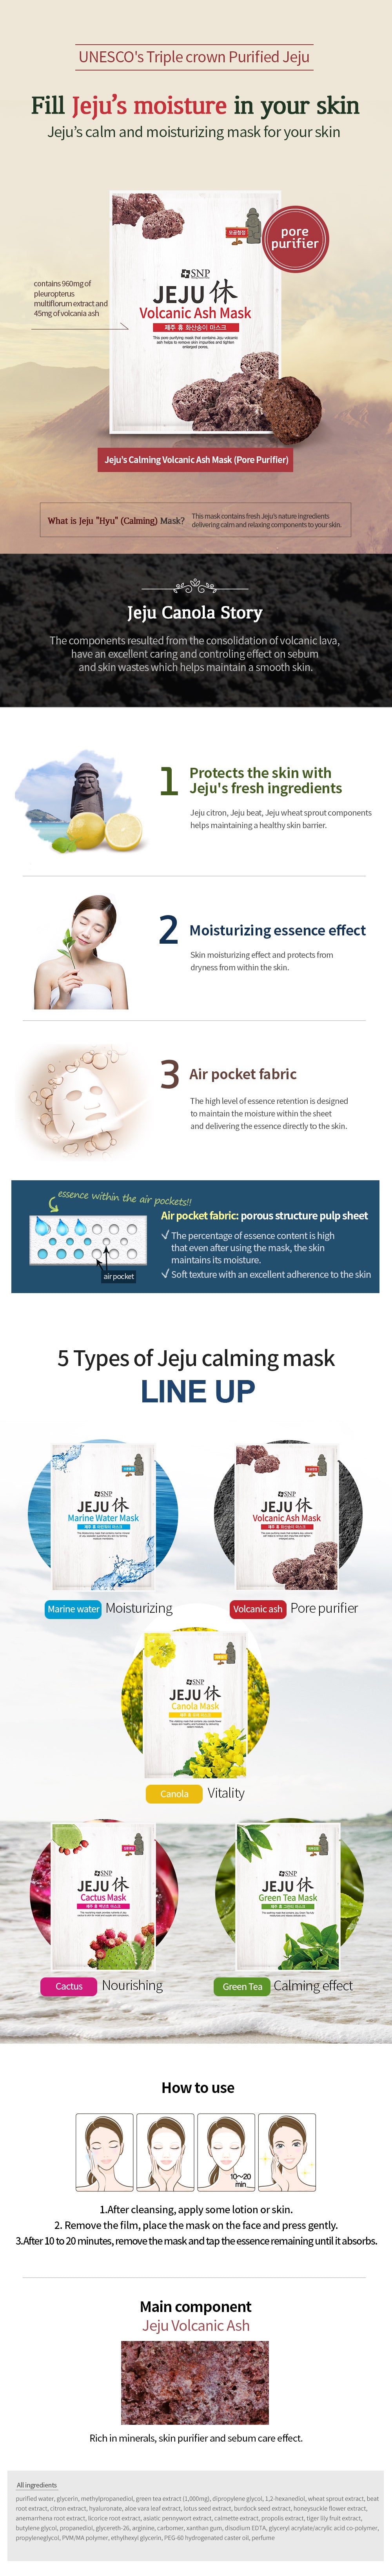 SNP Jeju Volcanic Ash Mask - La Cosmetique